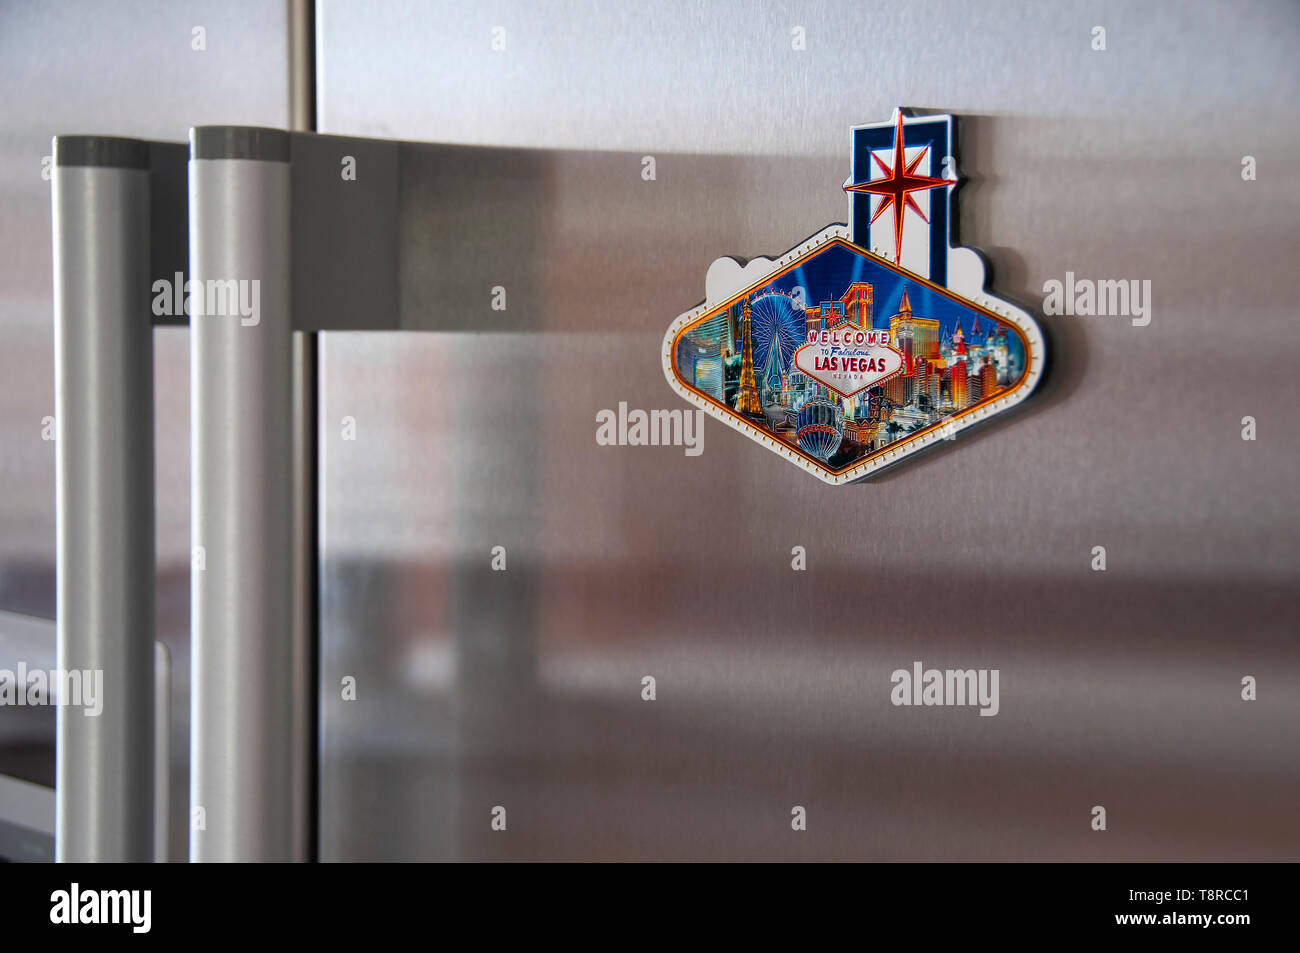 Las Vegas Kühlschrank Magnet befestigt, um eine moderne Edelstahl Kühlschrank Stockfoto